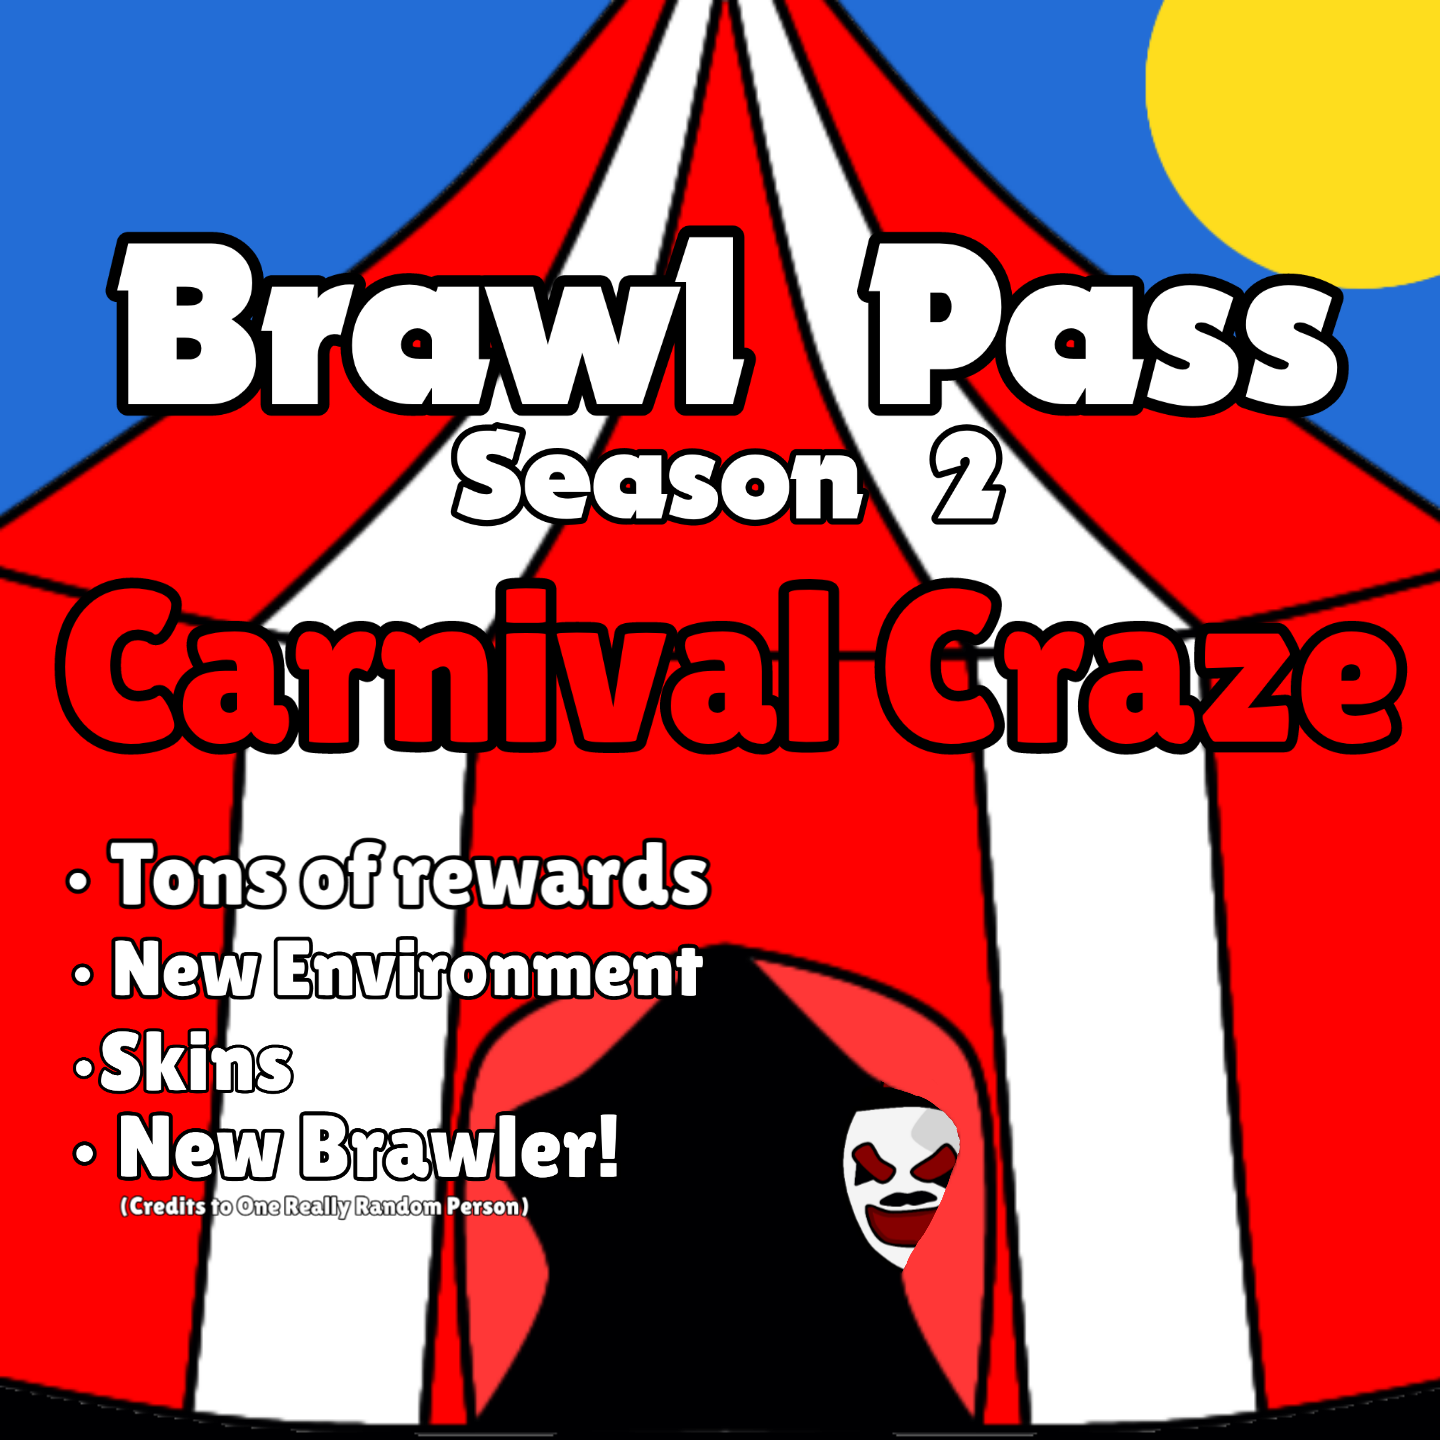 Idea Season 2 Carnival Craze Fandom - brawl stars 10 choses cachées